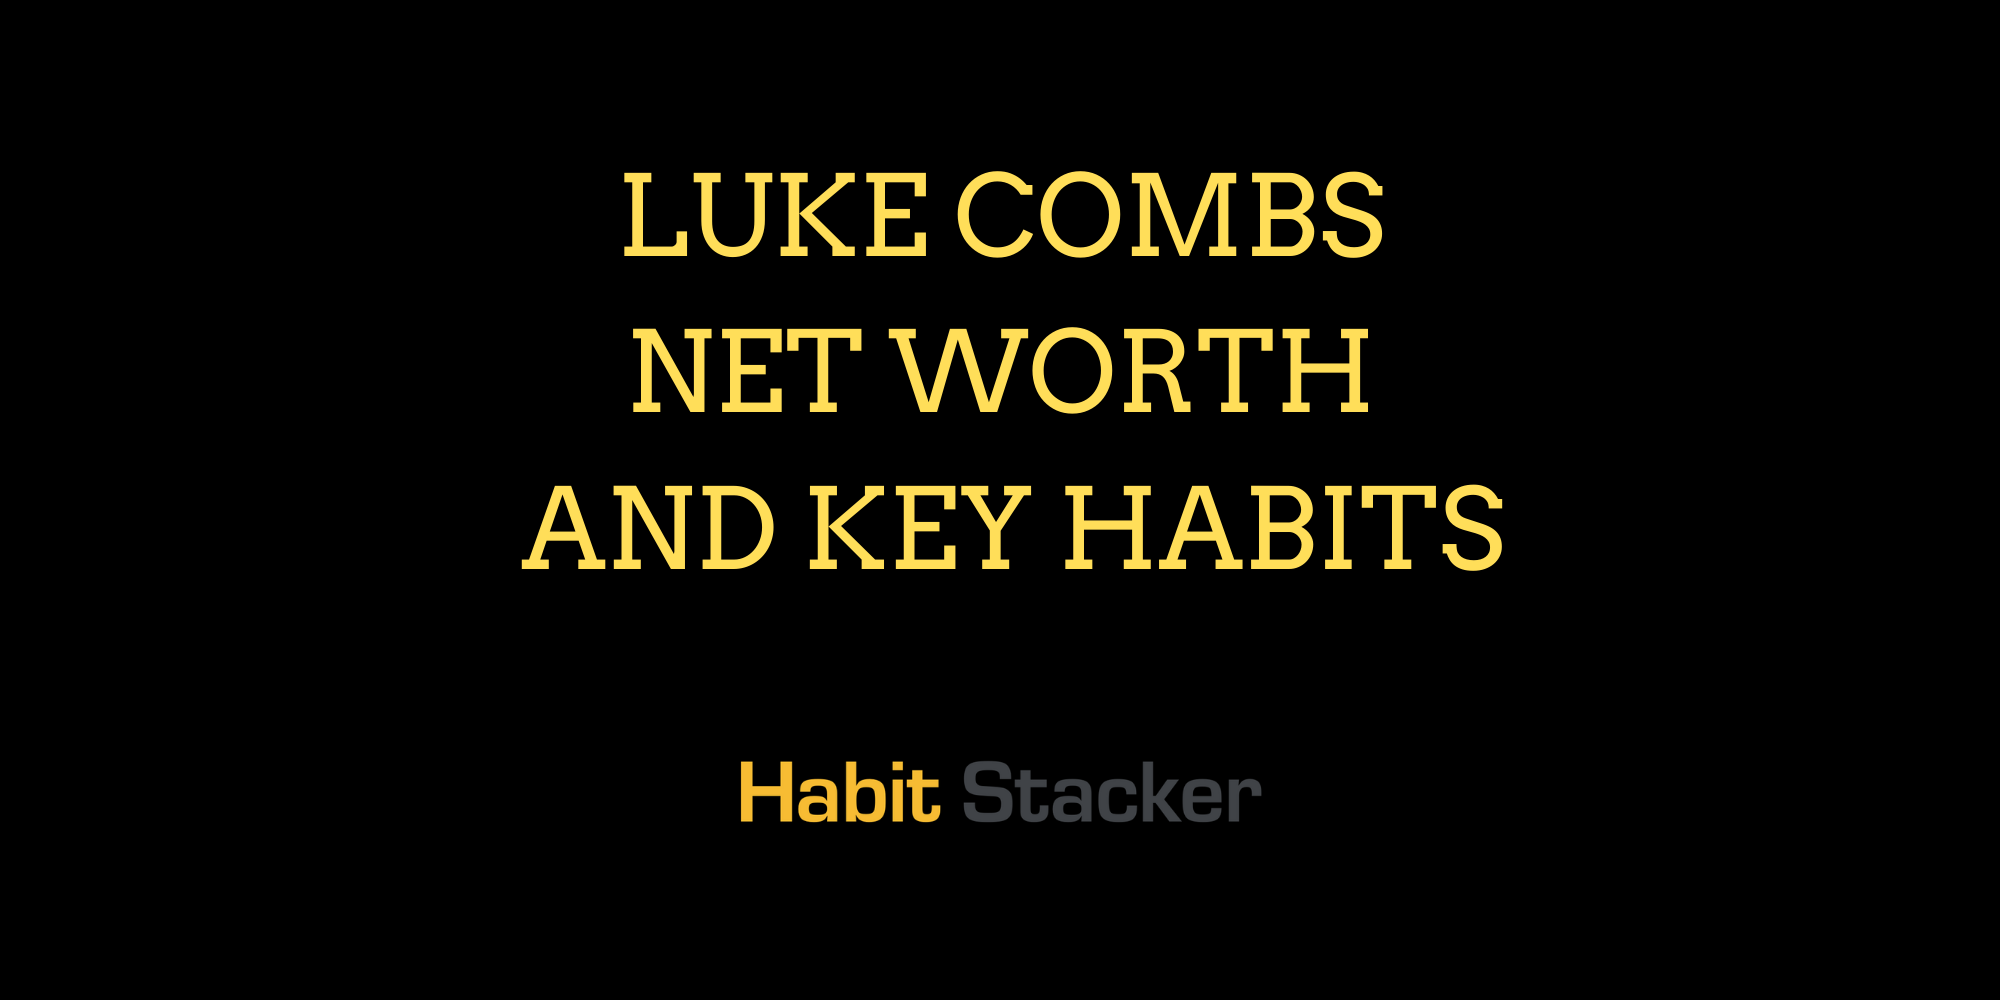 Luke Combs Net Worth and Key Habits